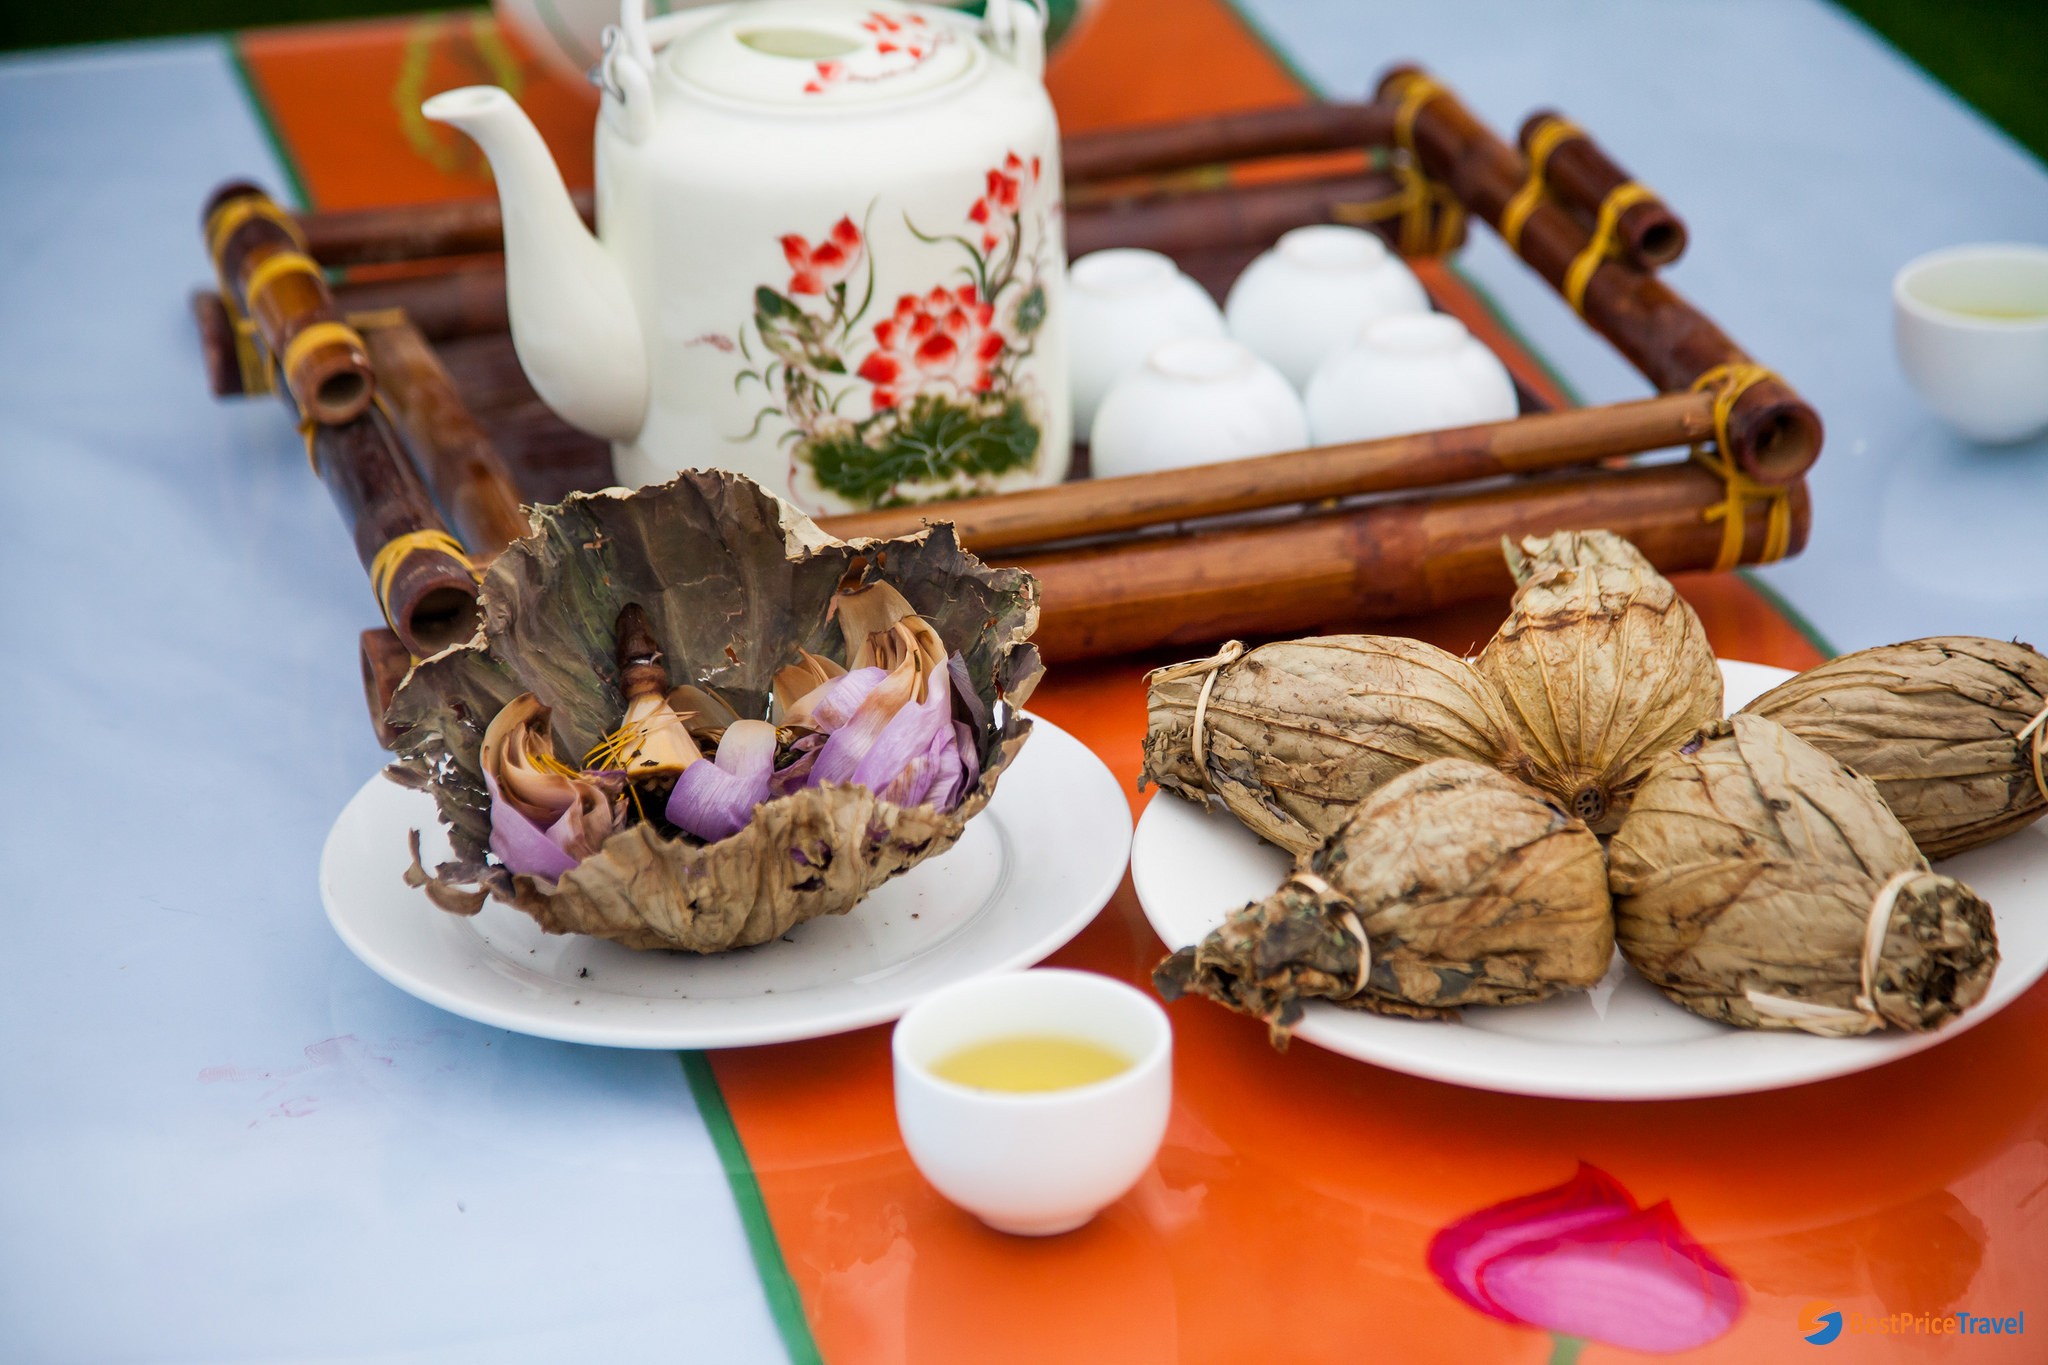 Vietnam's traditional lotus tea